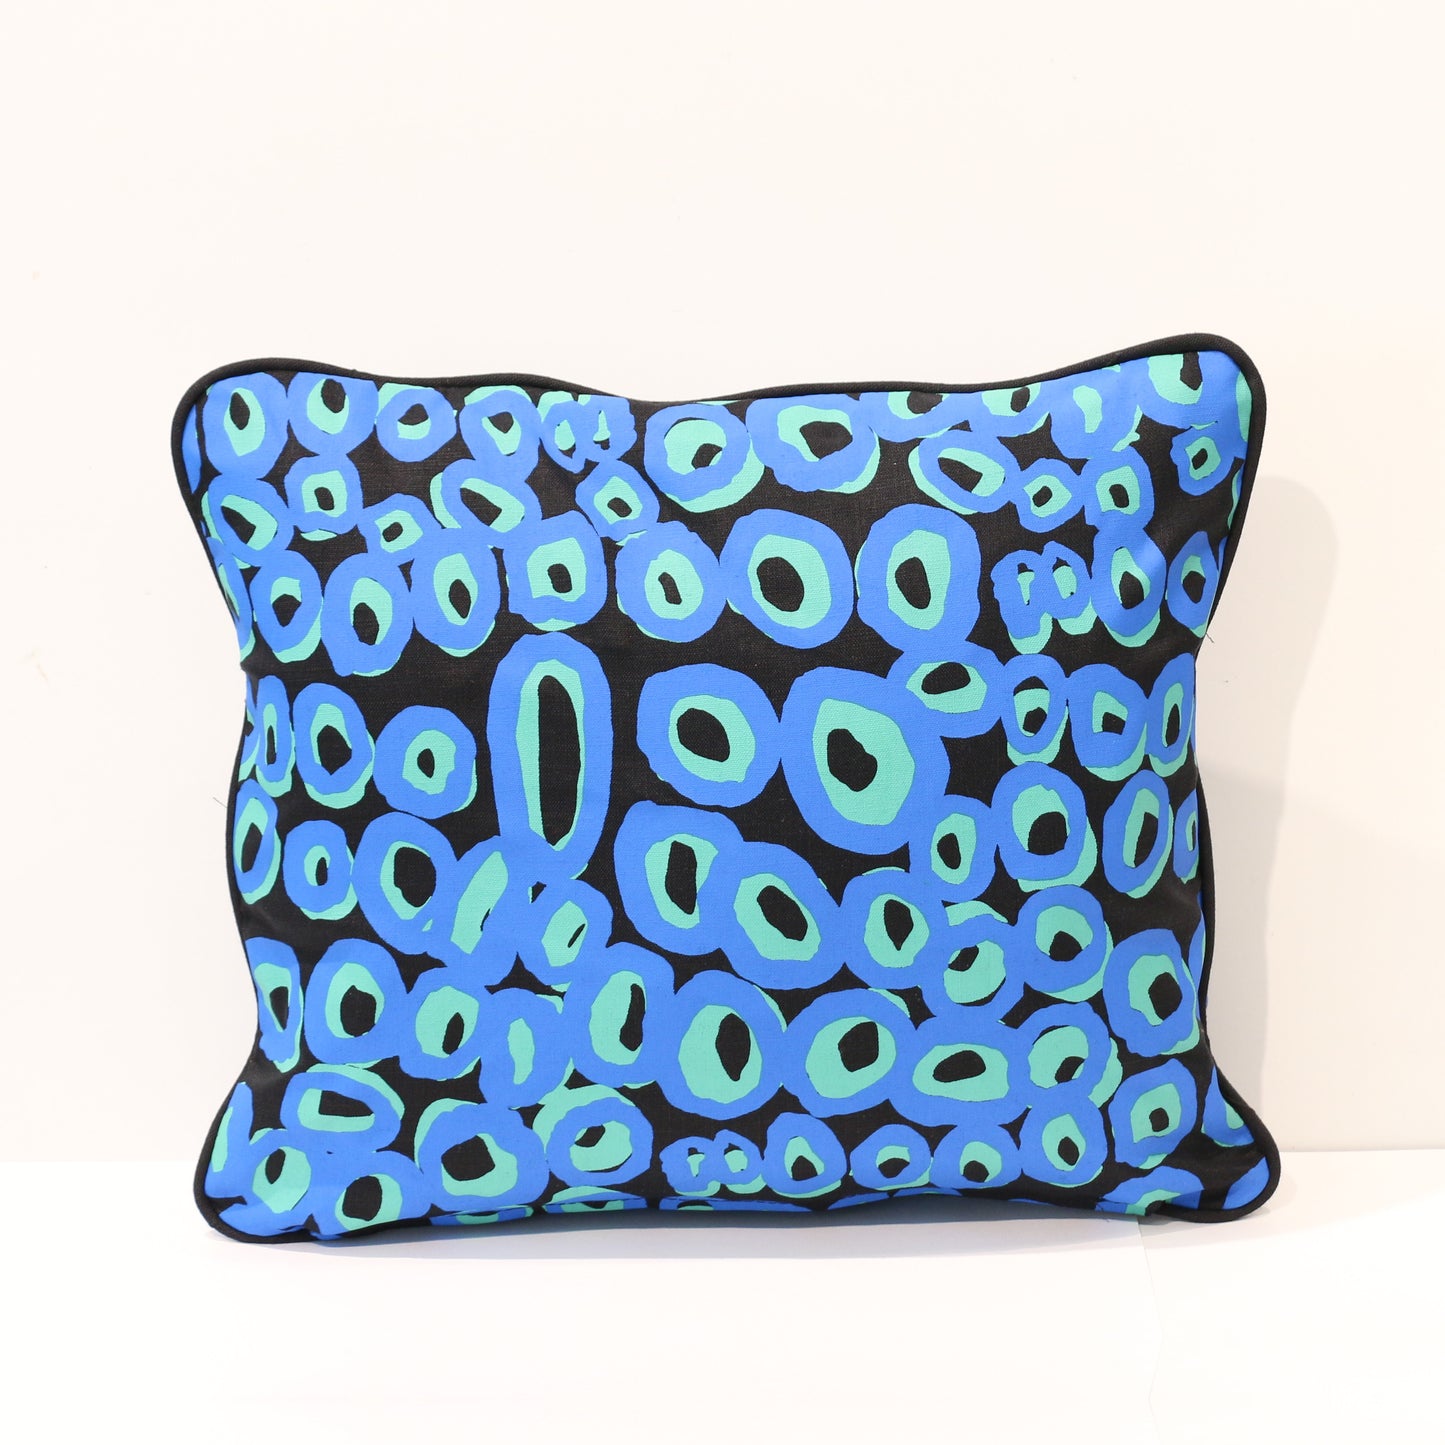 Cushions by Deka in Ikuntji fabrics